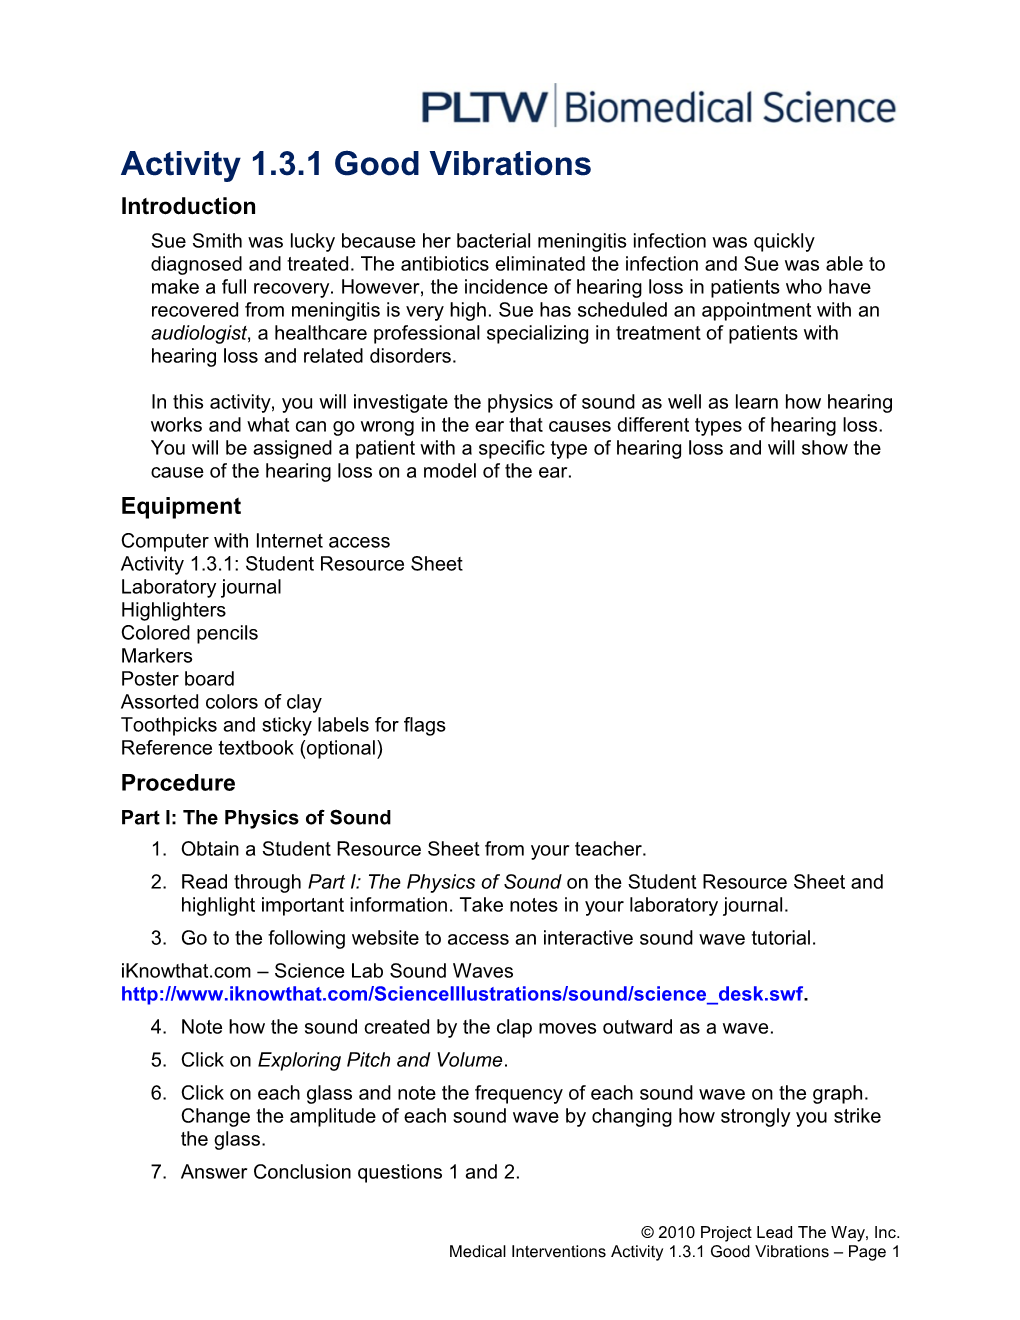 Activity 1.3.1 Good Vibrations